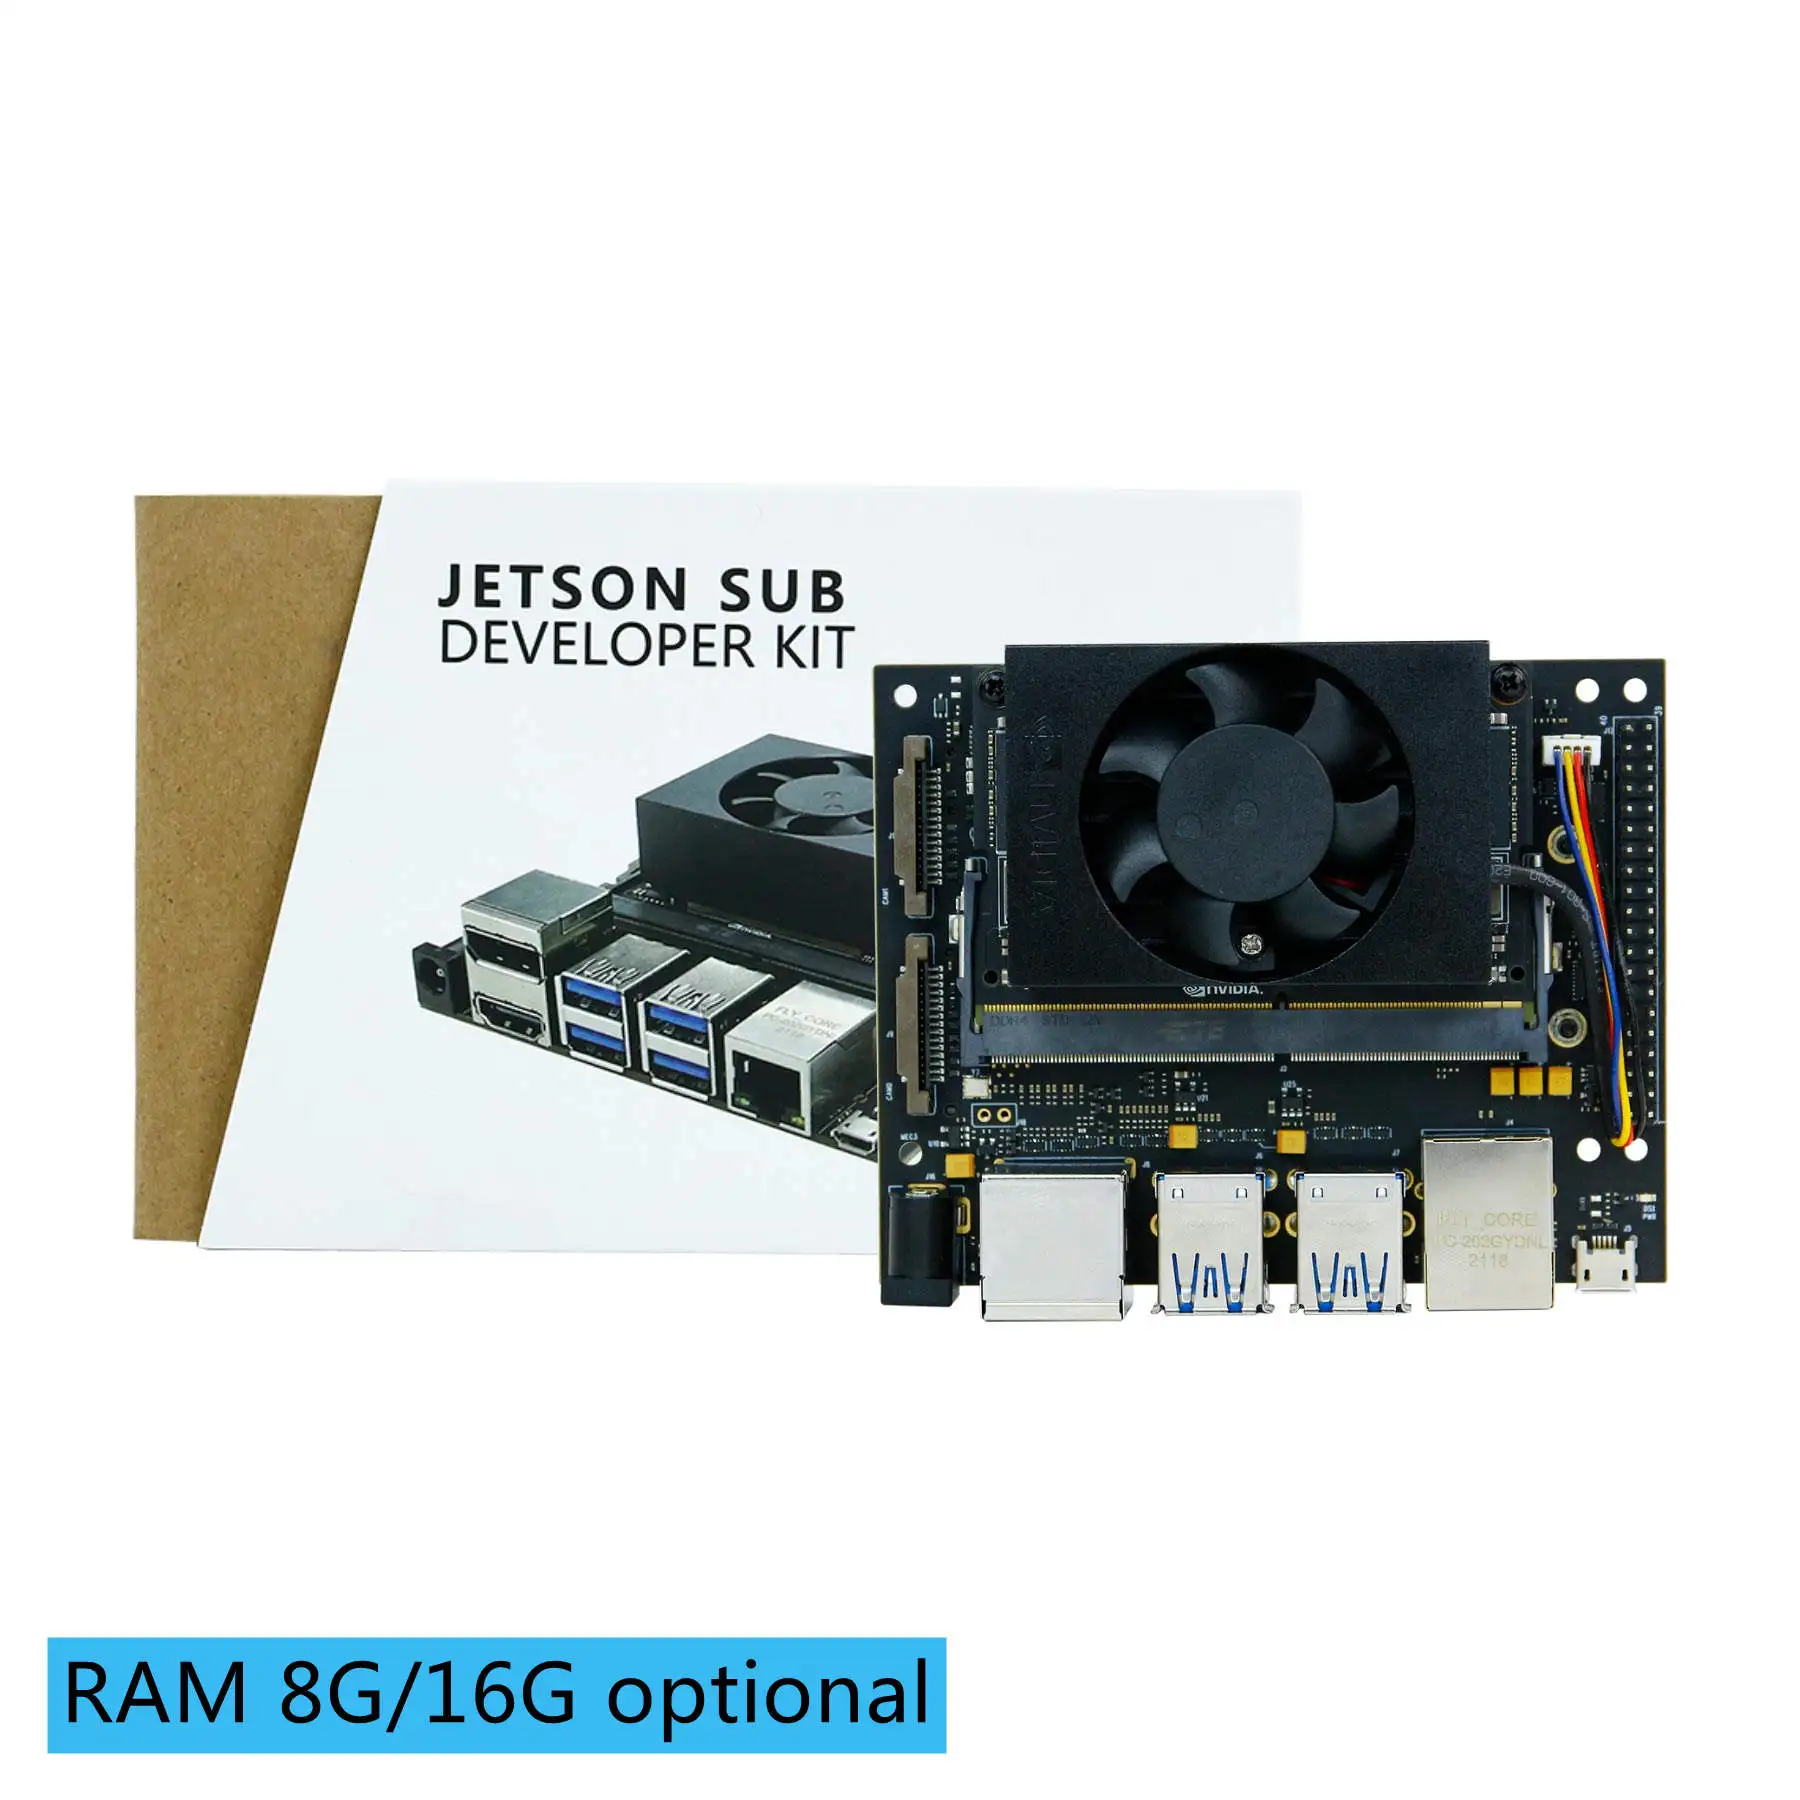 Jetson Xavier NX Developer Kit 16G eMMC Version with Core Module Artificial Intelligence Python Programming with 128G NVMe SSD